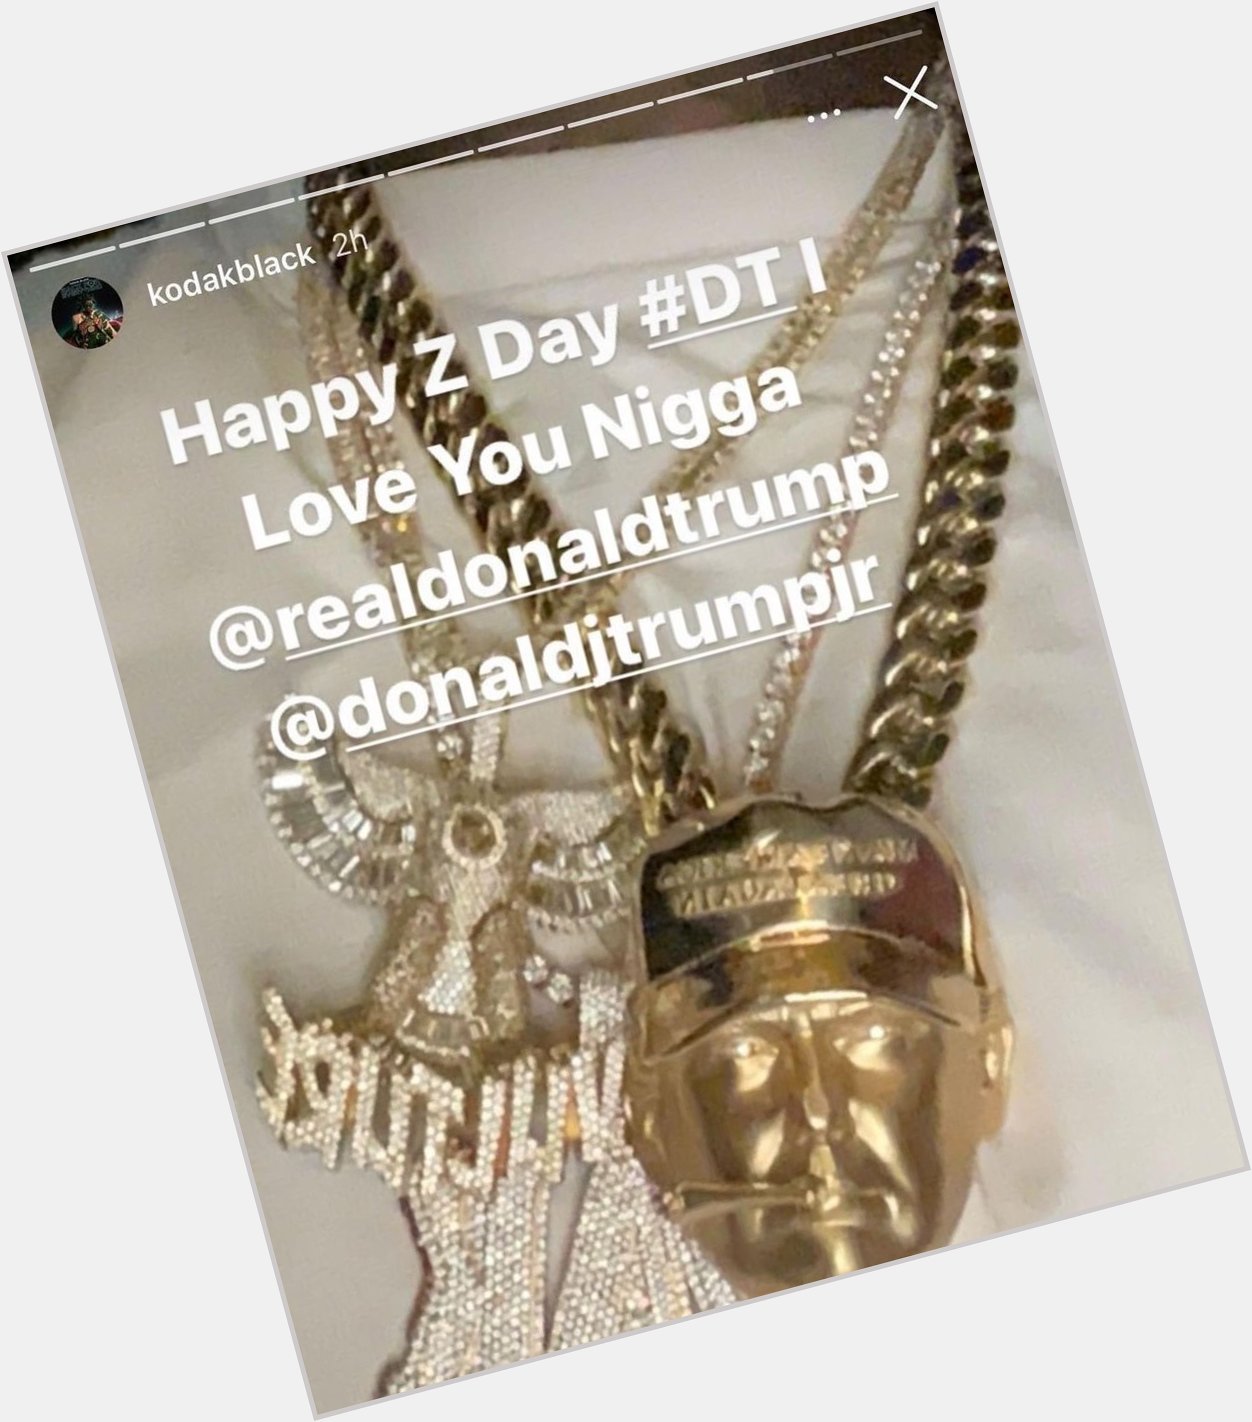 Kodak Black wished Donald Trump happy birthday while showing off his Trump chain 